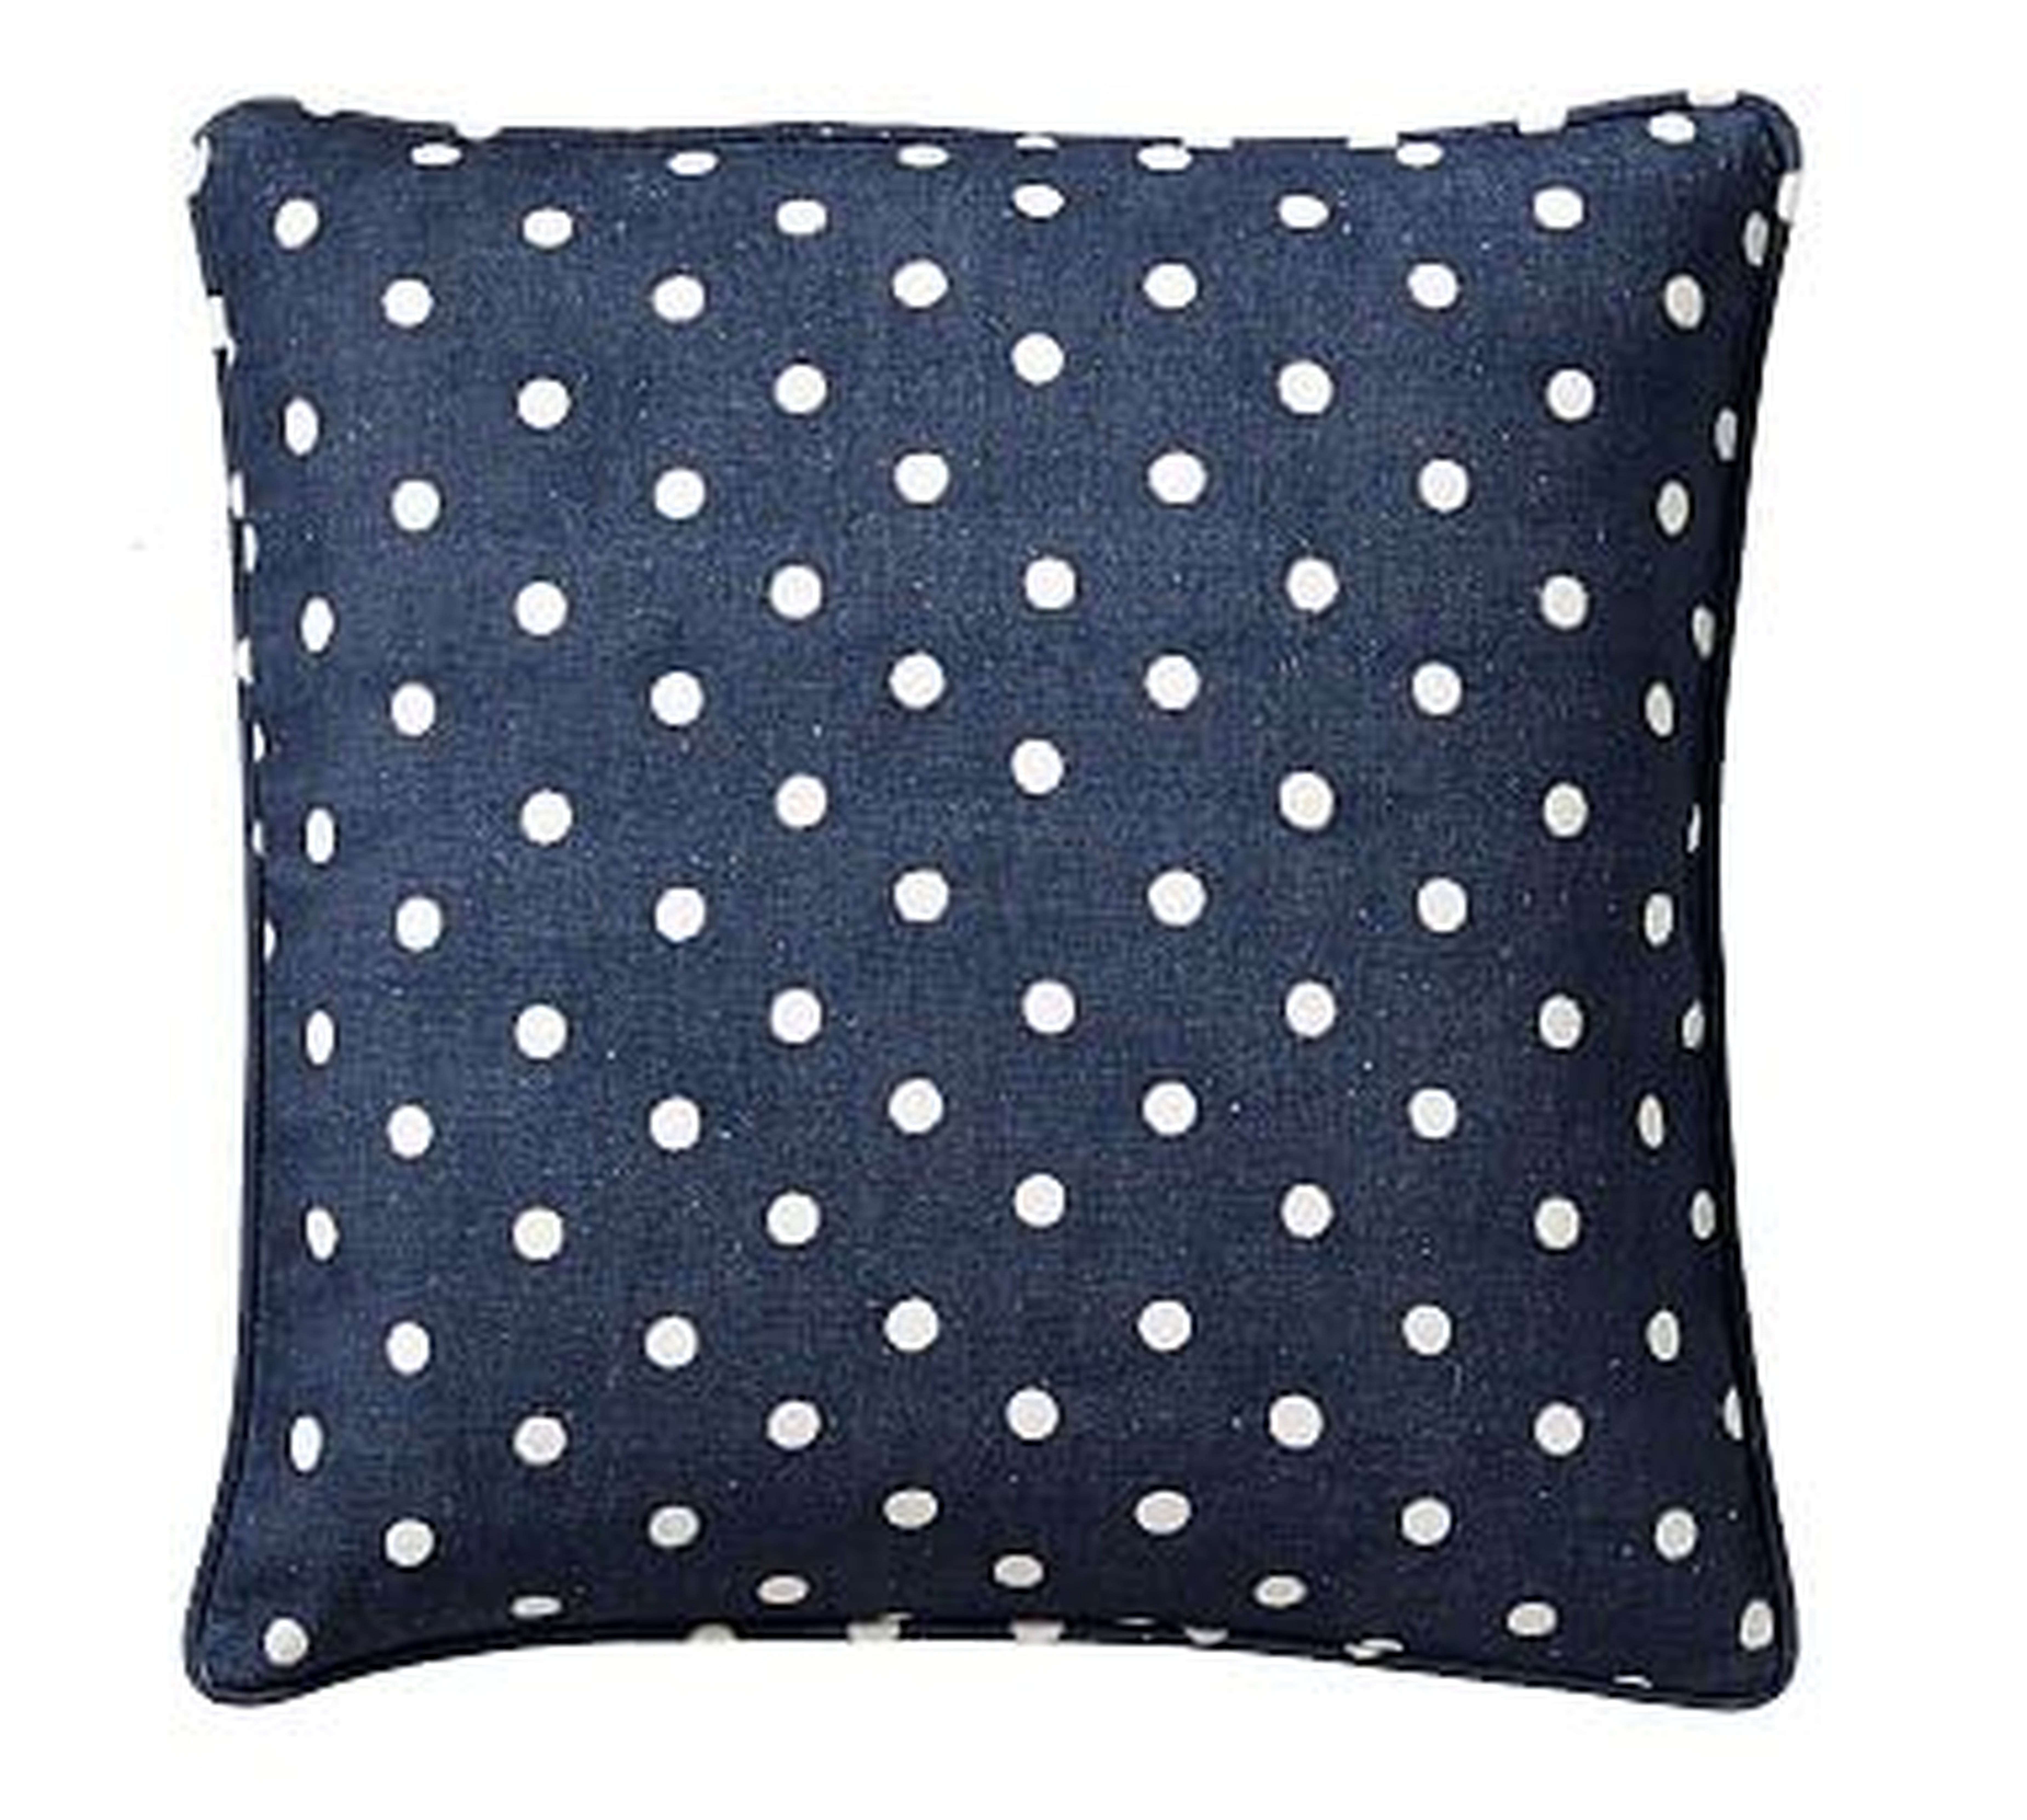 Caci Dot Pillow, Blue Multi, 20" - Pottery Barn